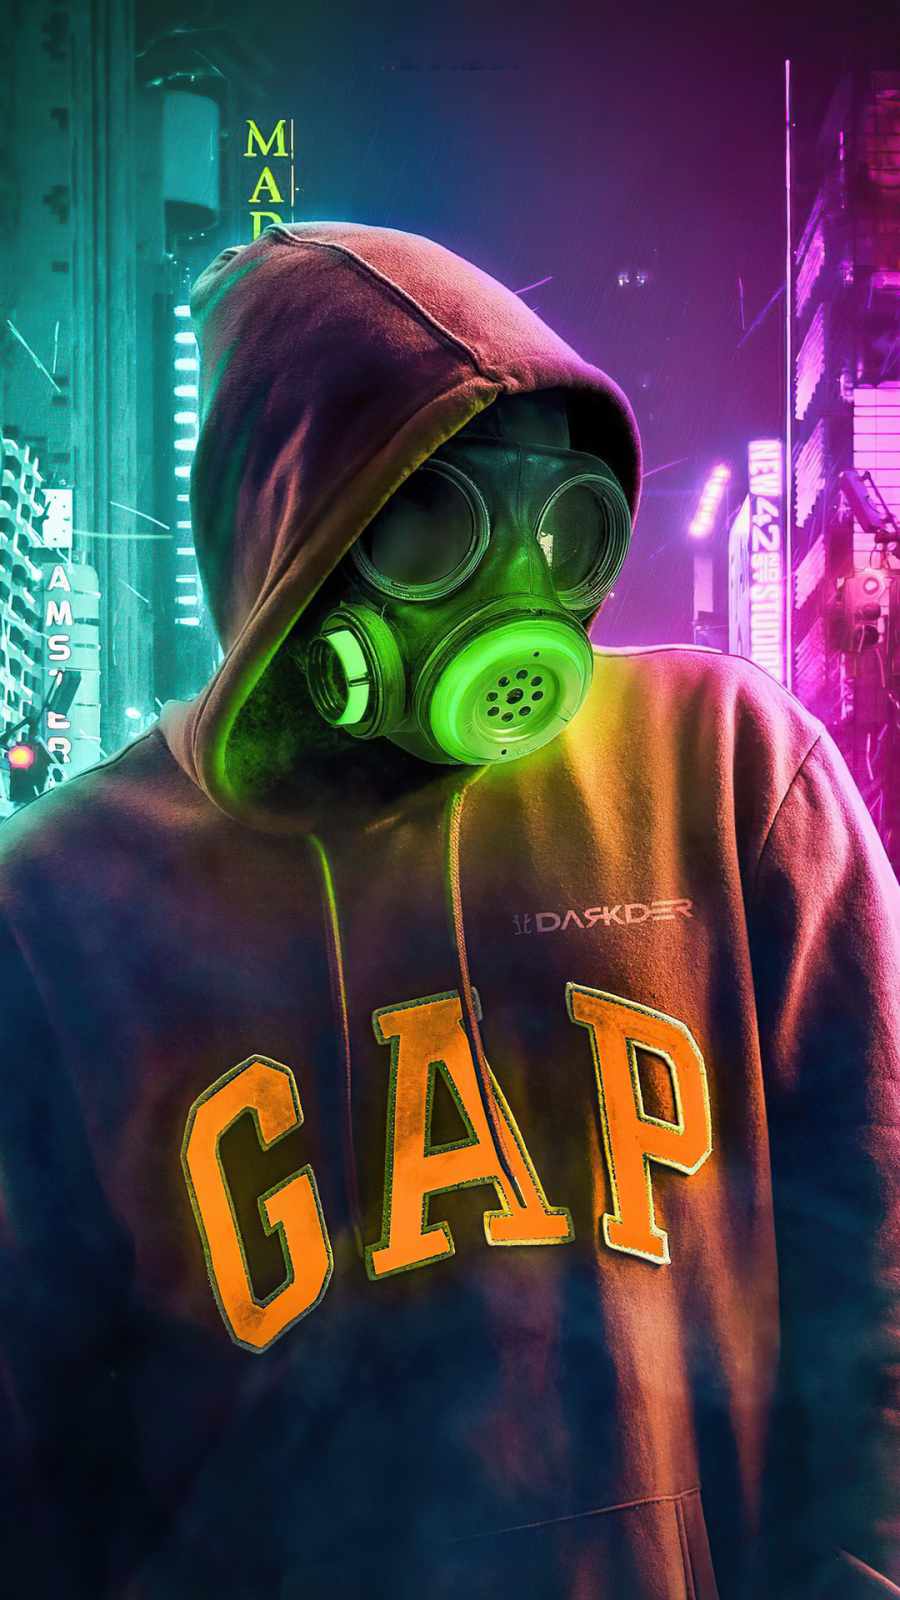 Toxic Mask Hoodie Guy iPhone Wallpaper